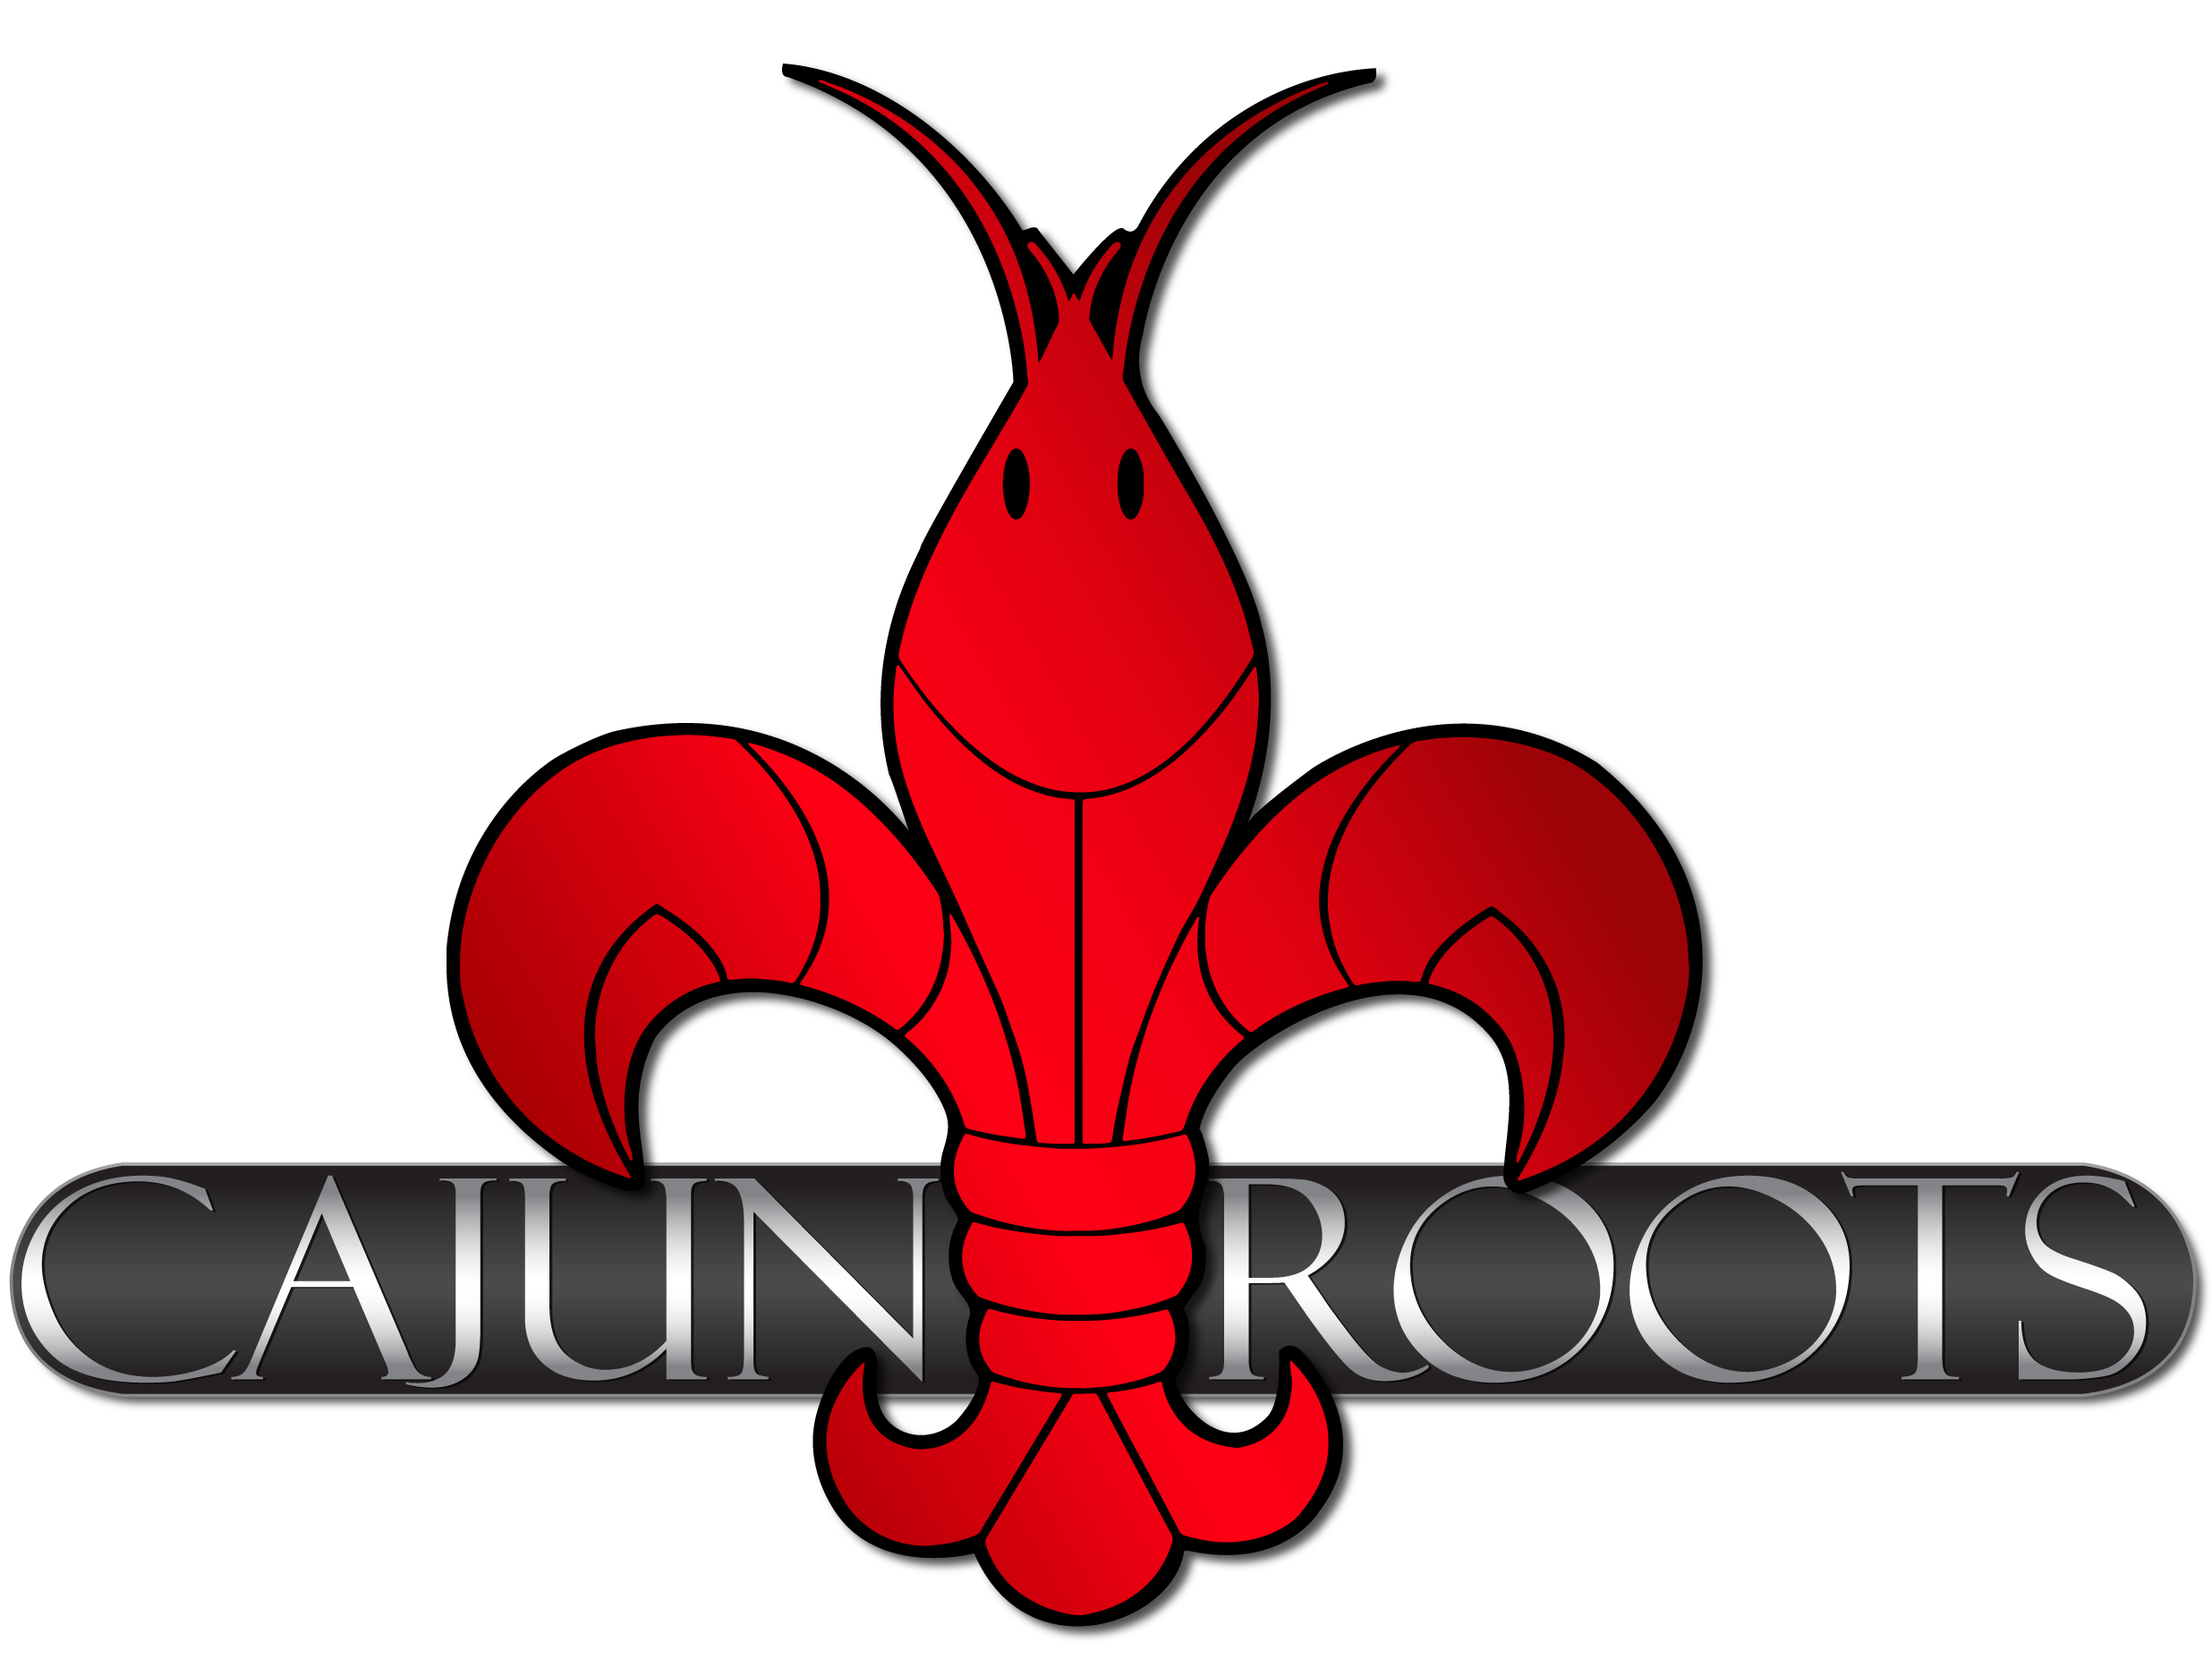 Cajun Roots Crawfish